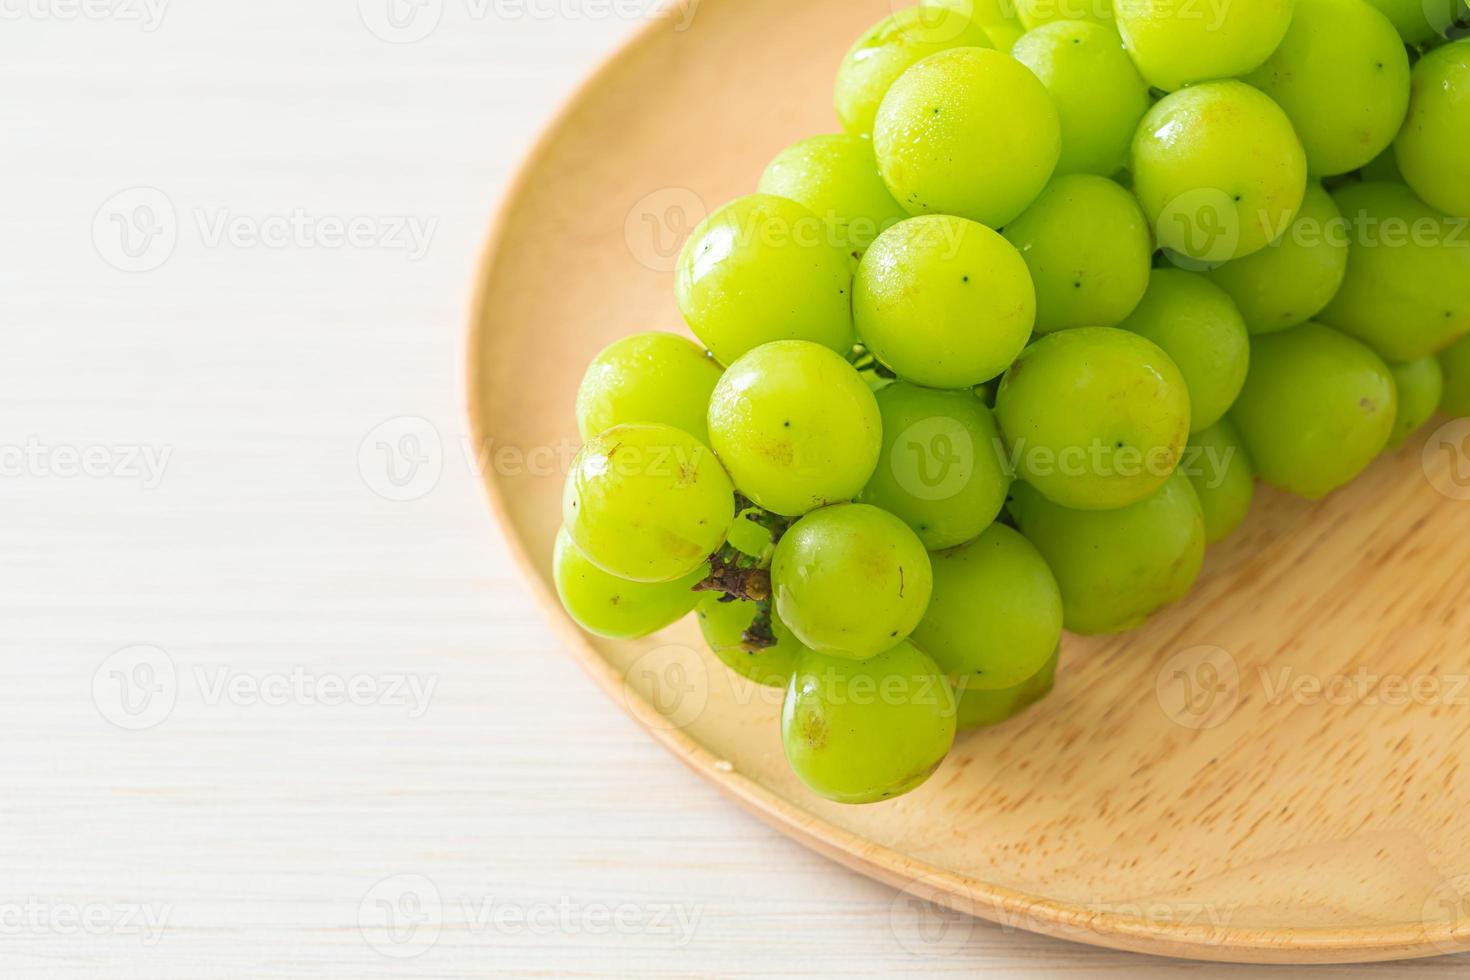 fresh green grape on wood plate photo